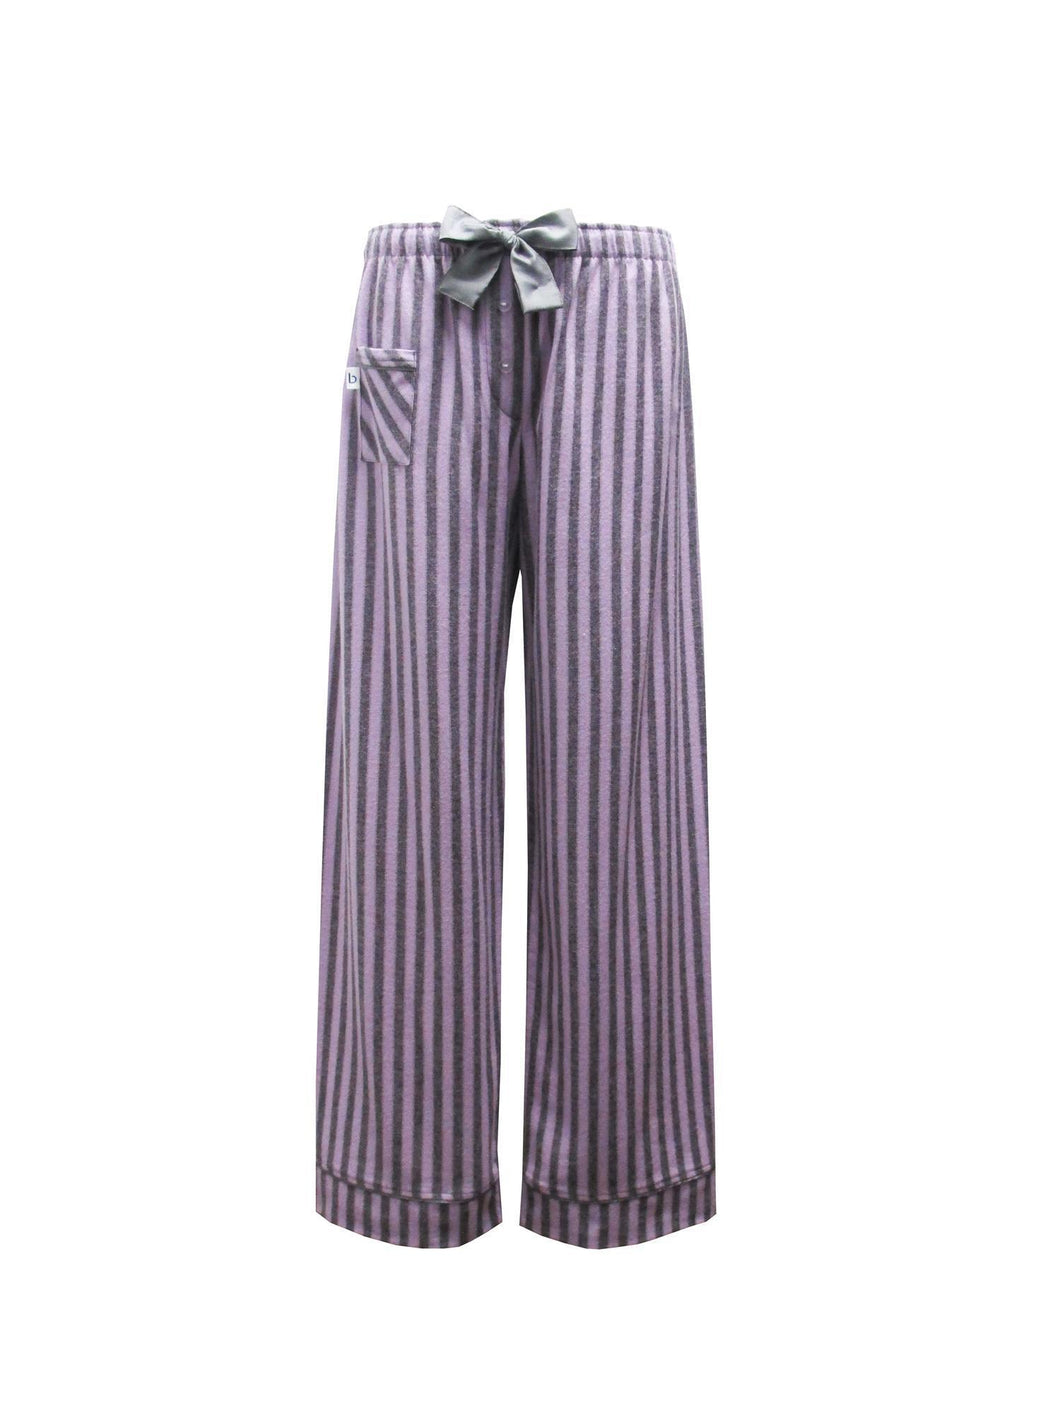 Boxercraft Women's Cotton Flannel Striped Sleep Pants